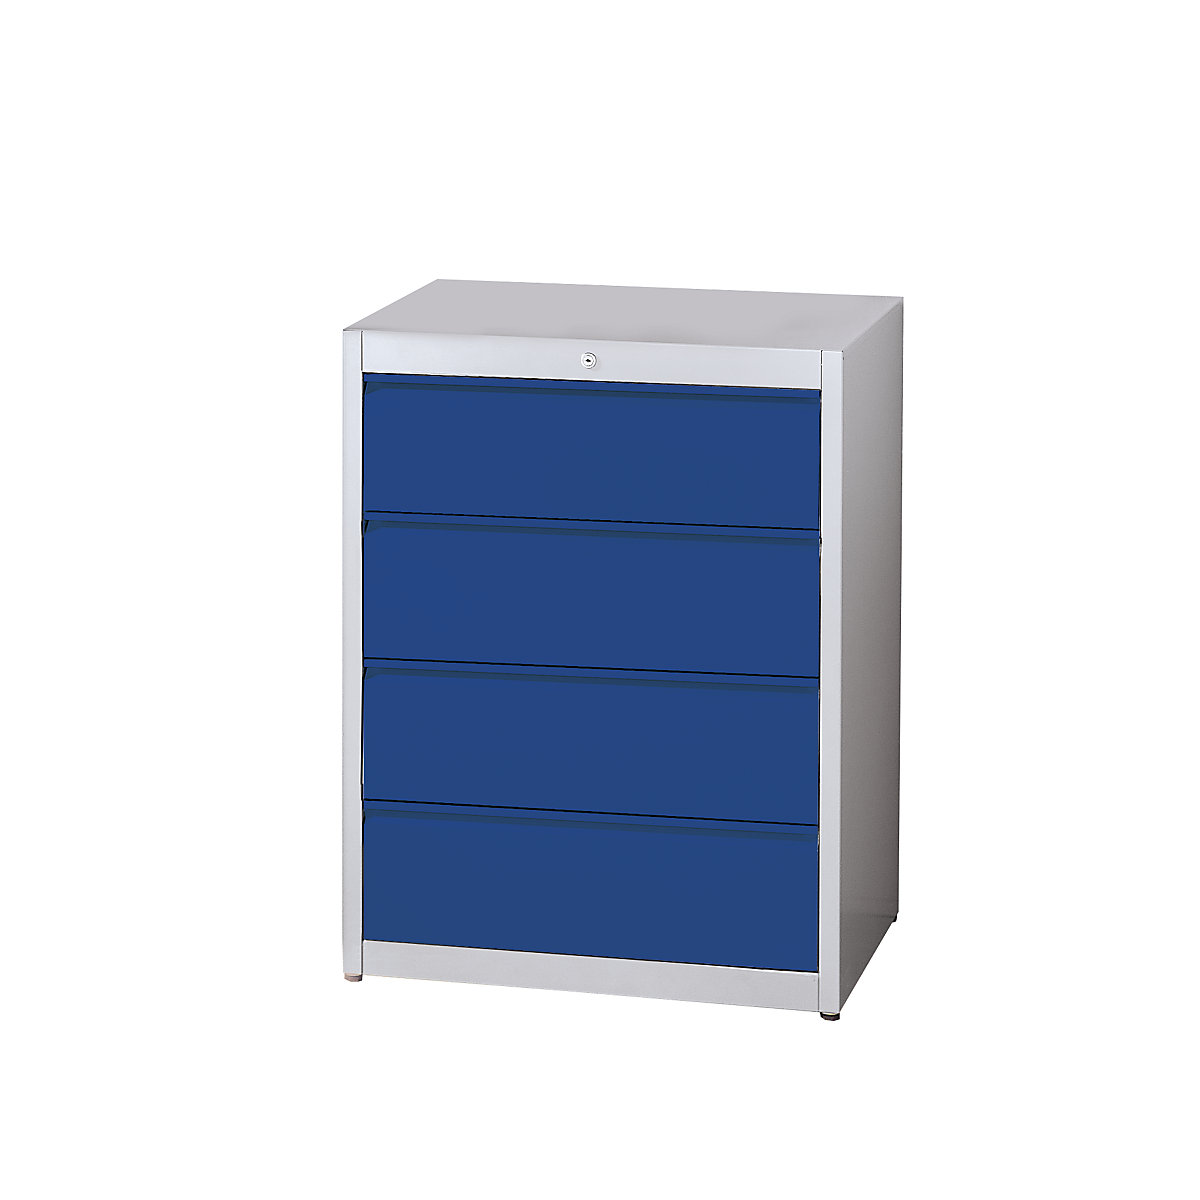 Kartotečni predalnik, oprijemalne letve – mauser, 4 predali, 3 vrste, svetlo siva/ultramarin modra-6